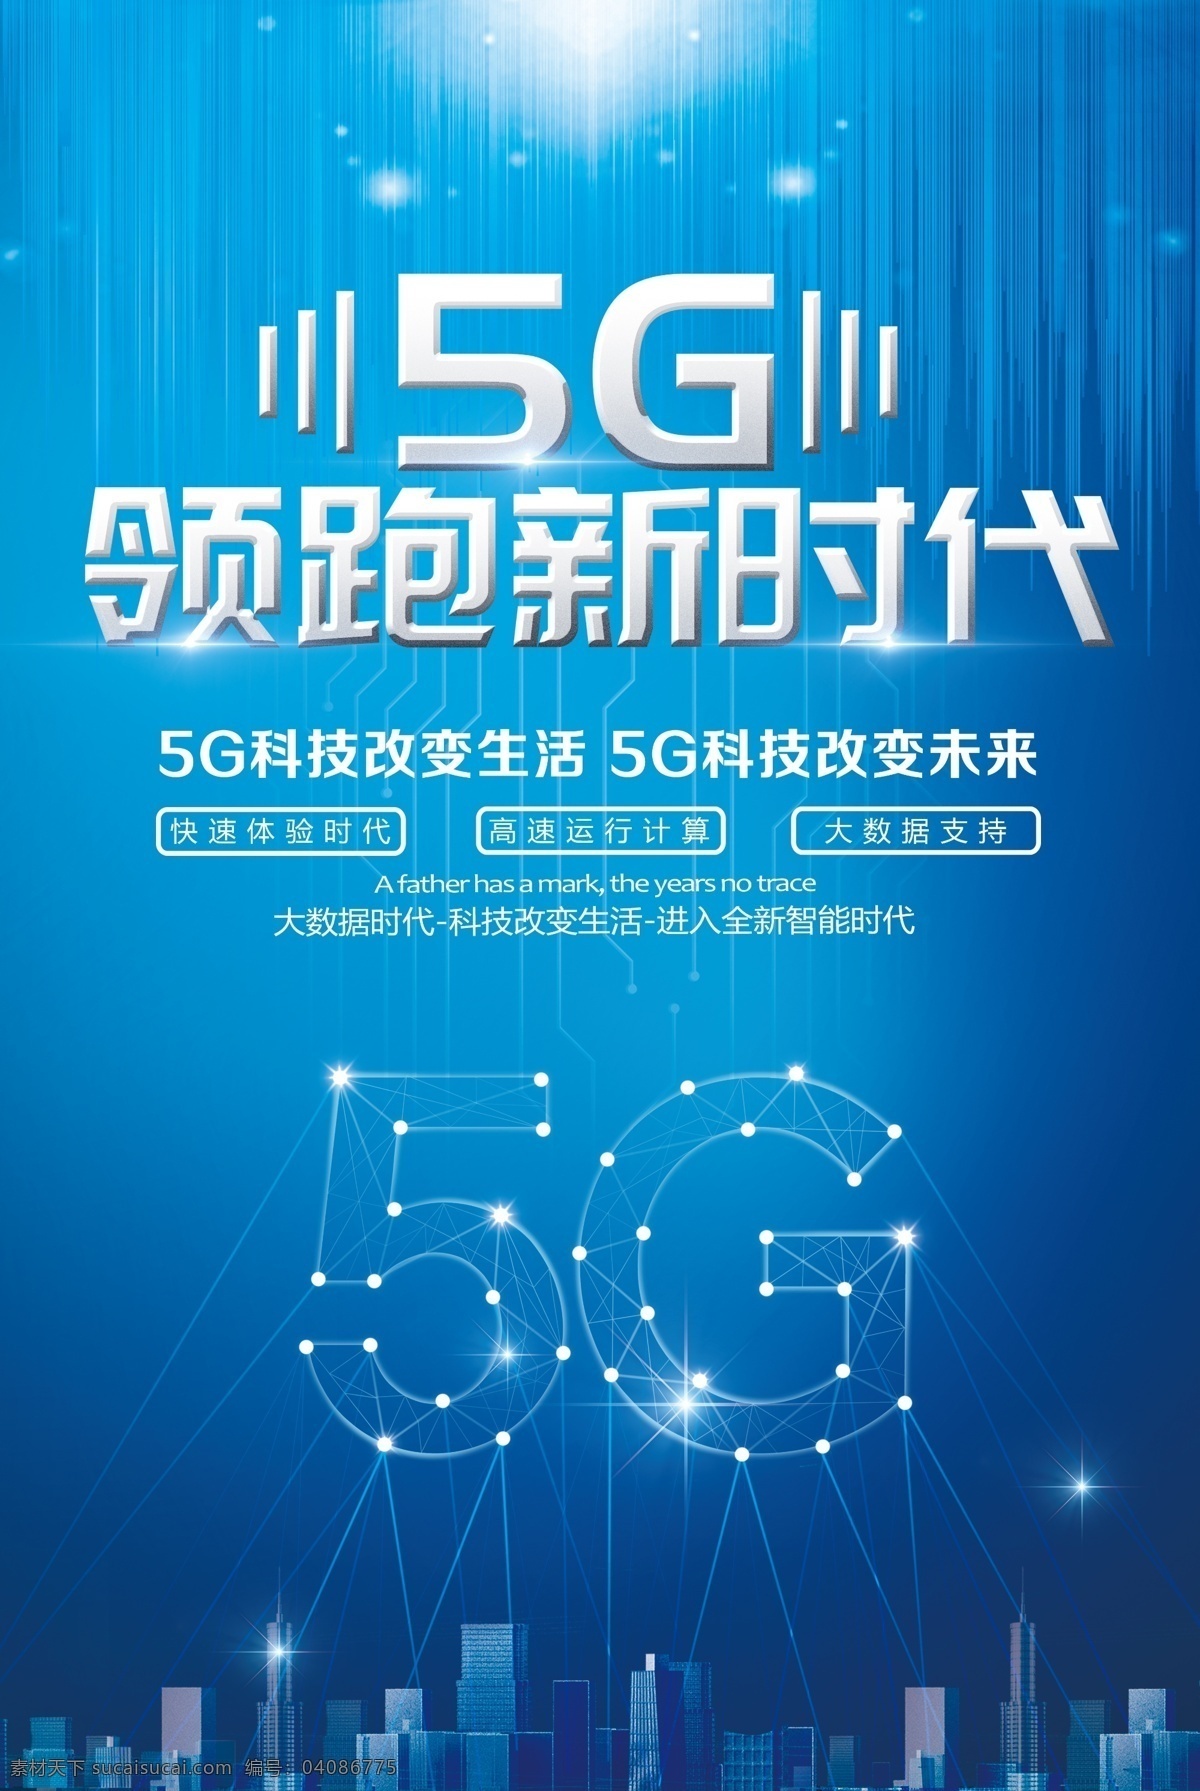 5g 极 速 网络 banner 极速 科技 蓝色背景 5g海报素材 分层